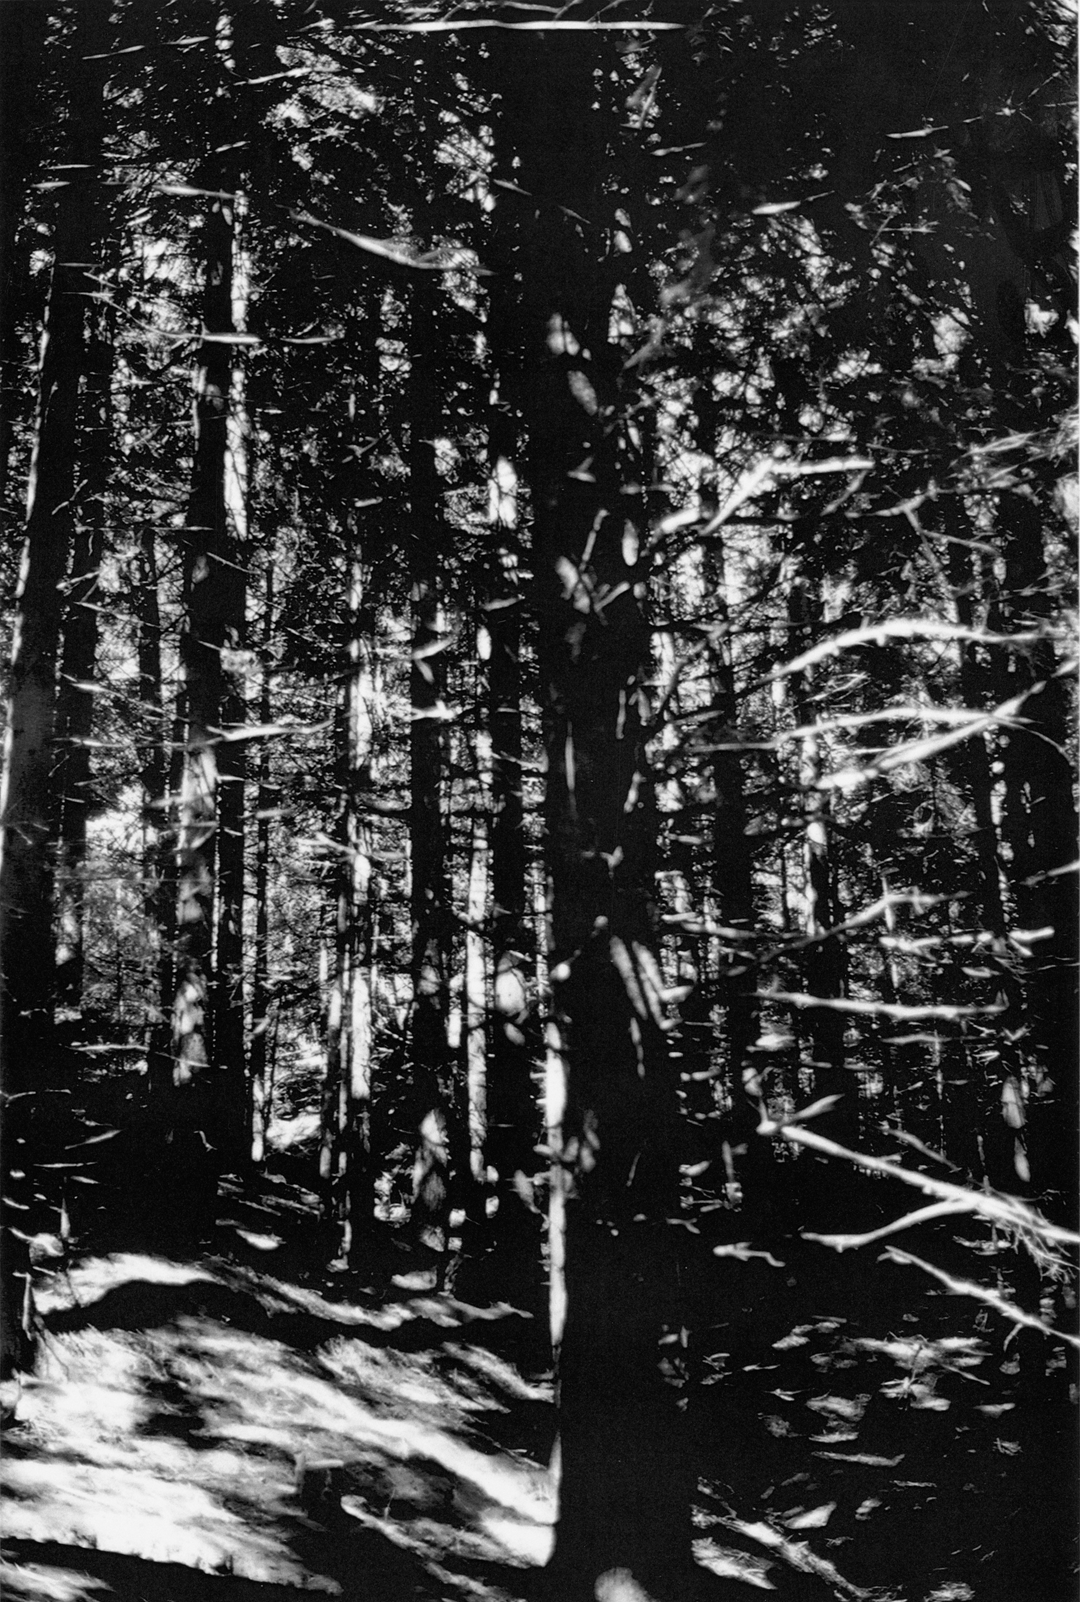 Wald (Briol I), 2008, by Wolfgang Tillmans